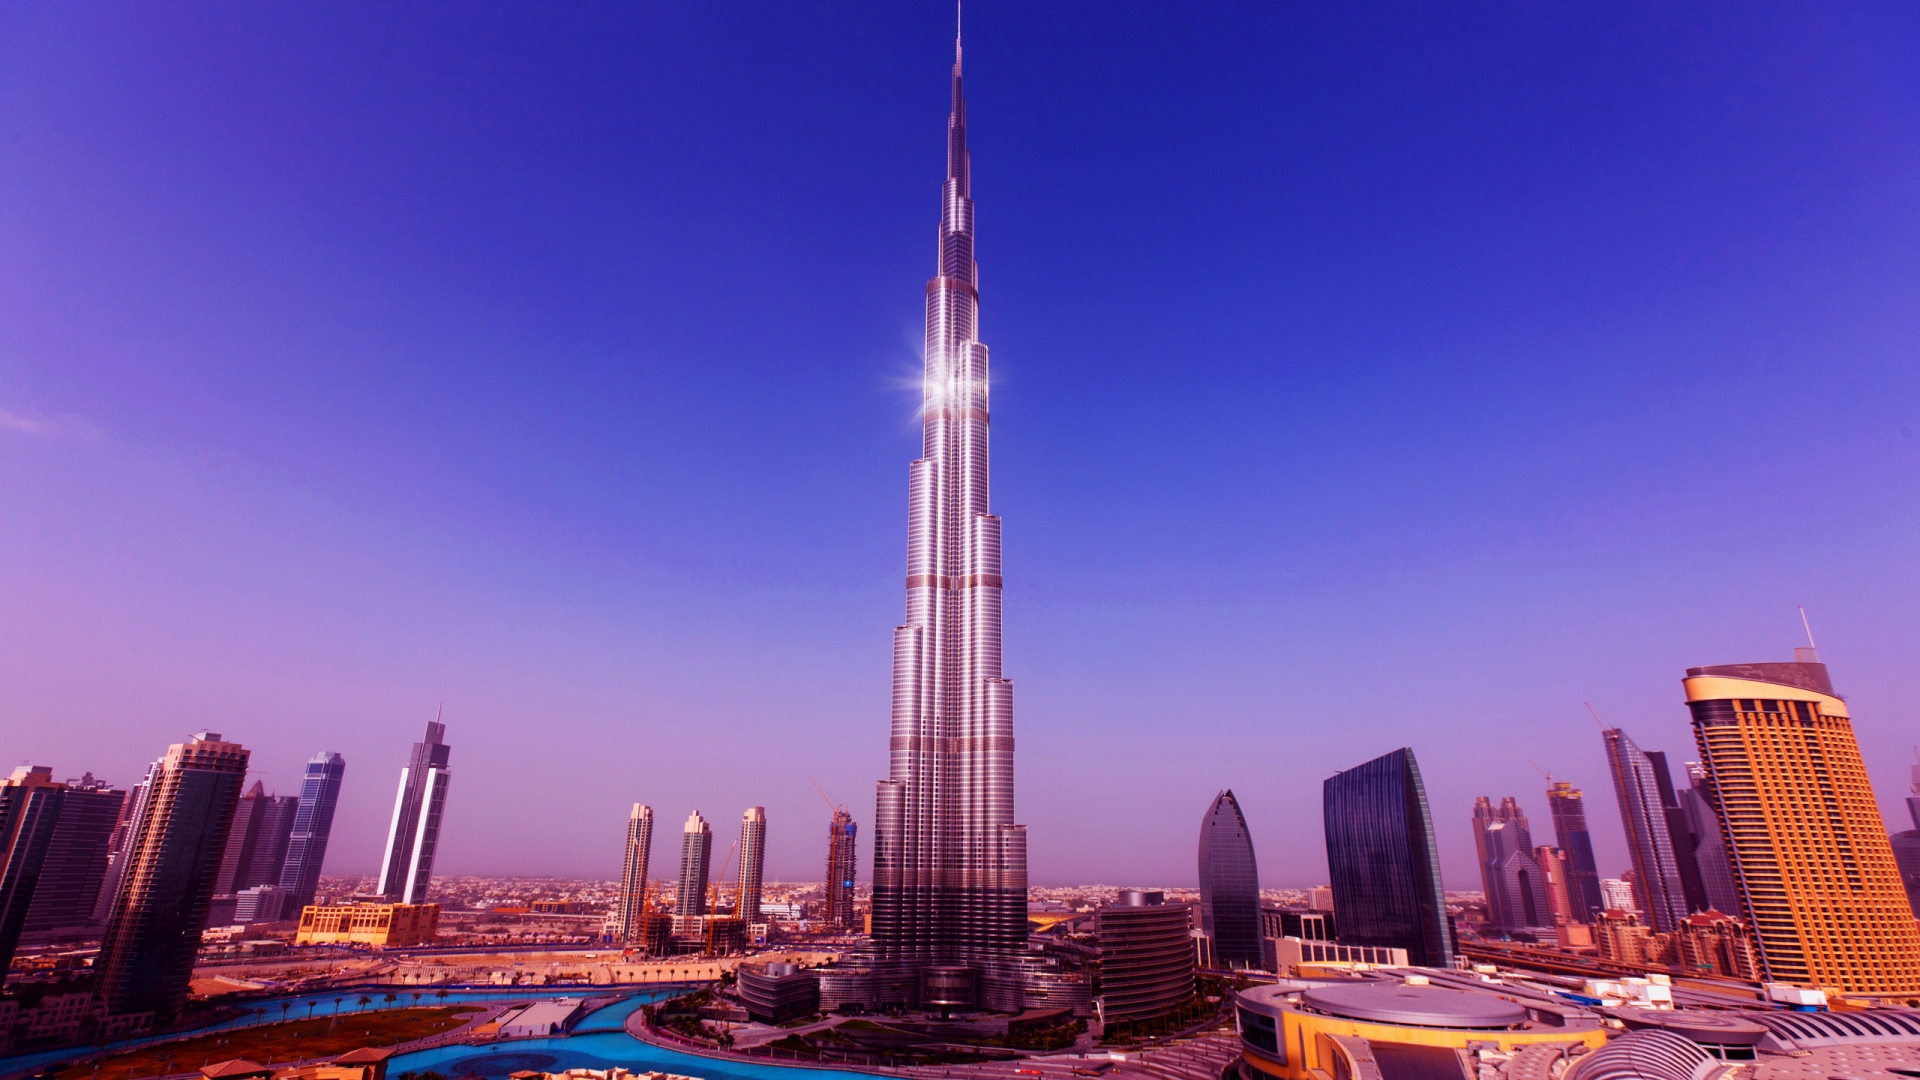 Burj Khalifa Tower Dubai for 1920 x 1080 HDTV 1080p resolution